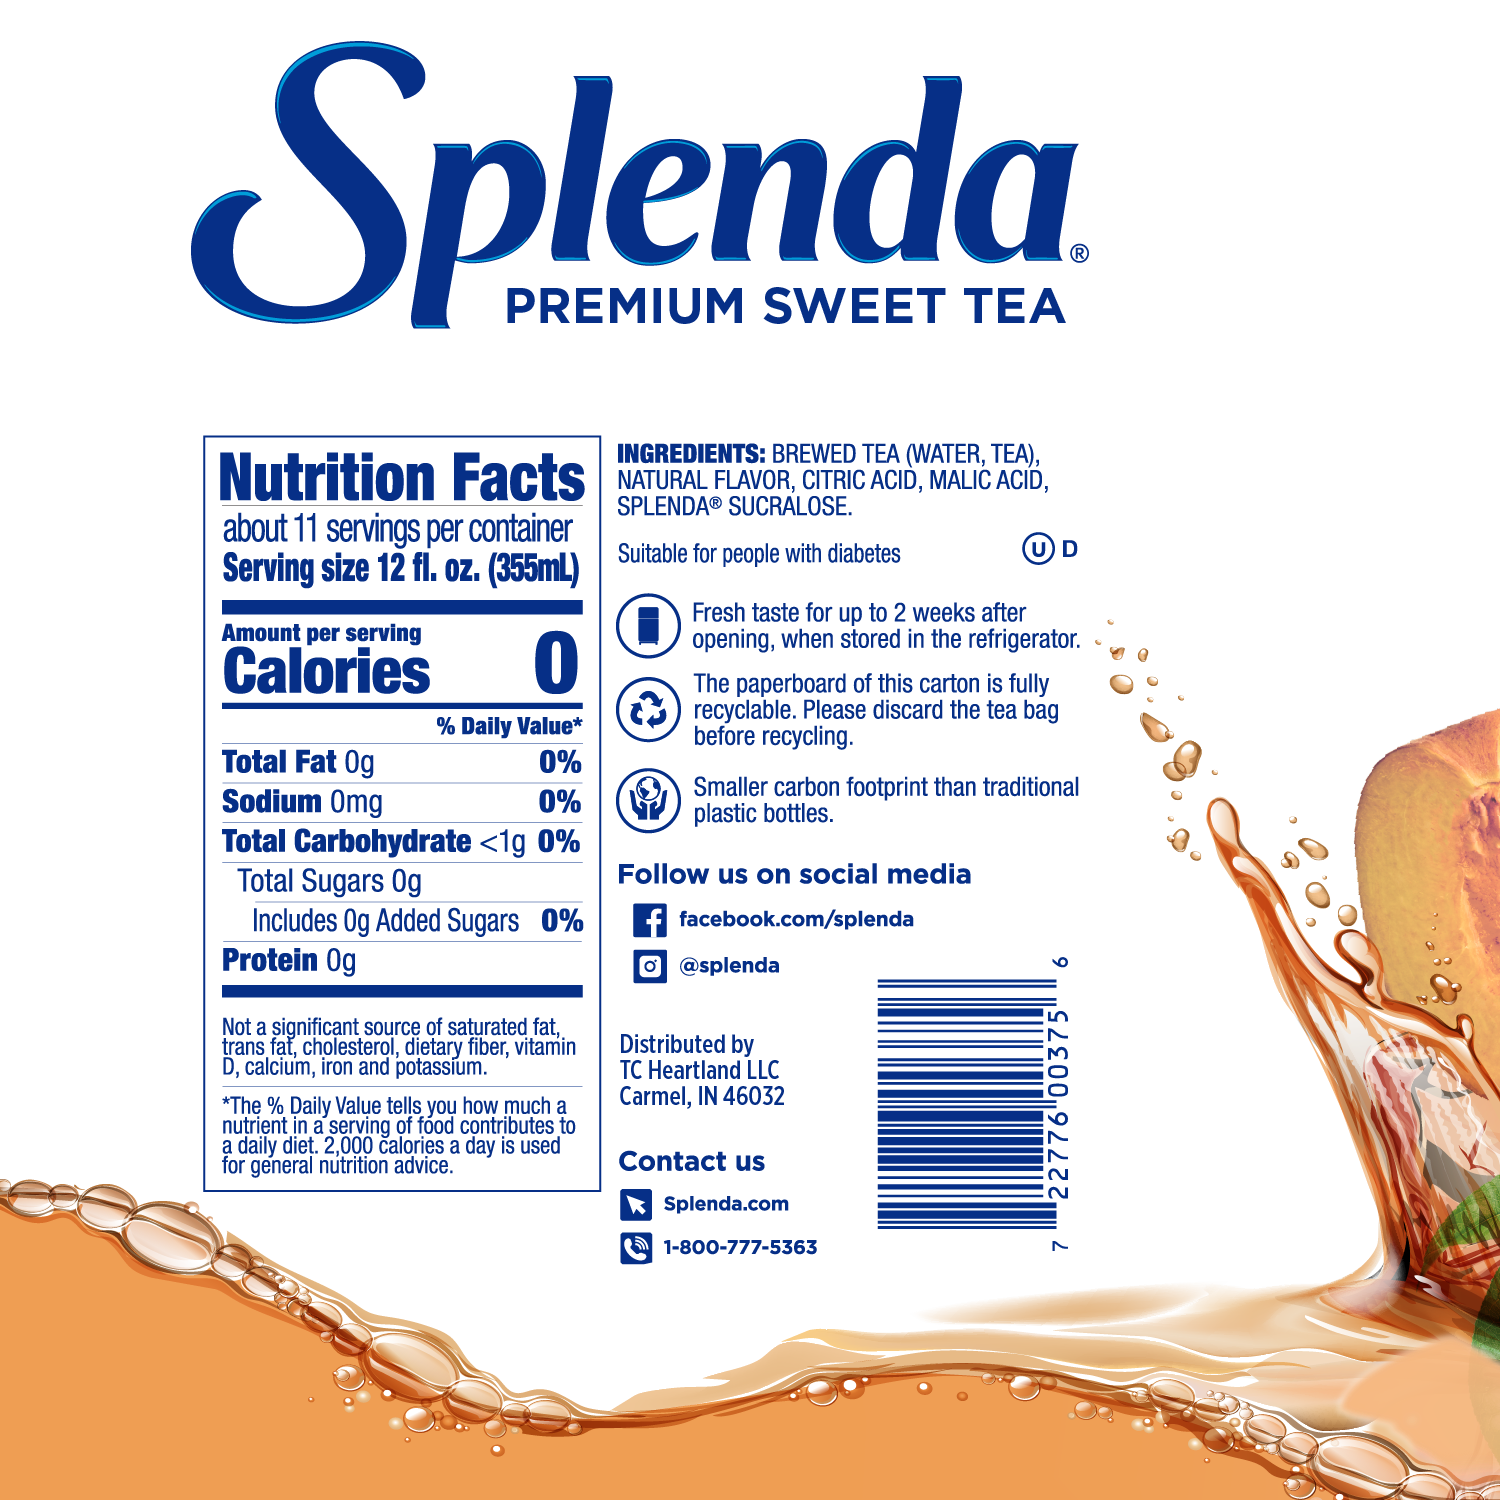 Splenda White Peach Tea - Nutrition Facts Panel